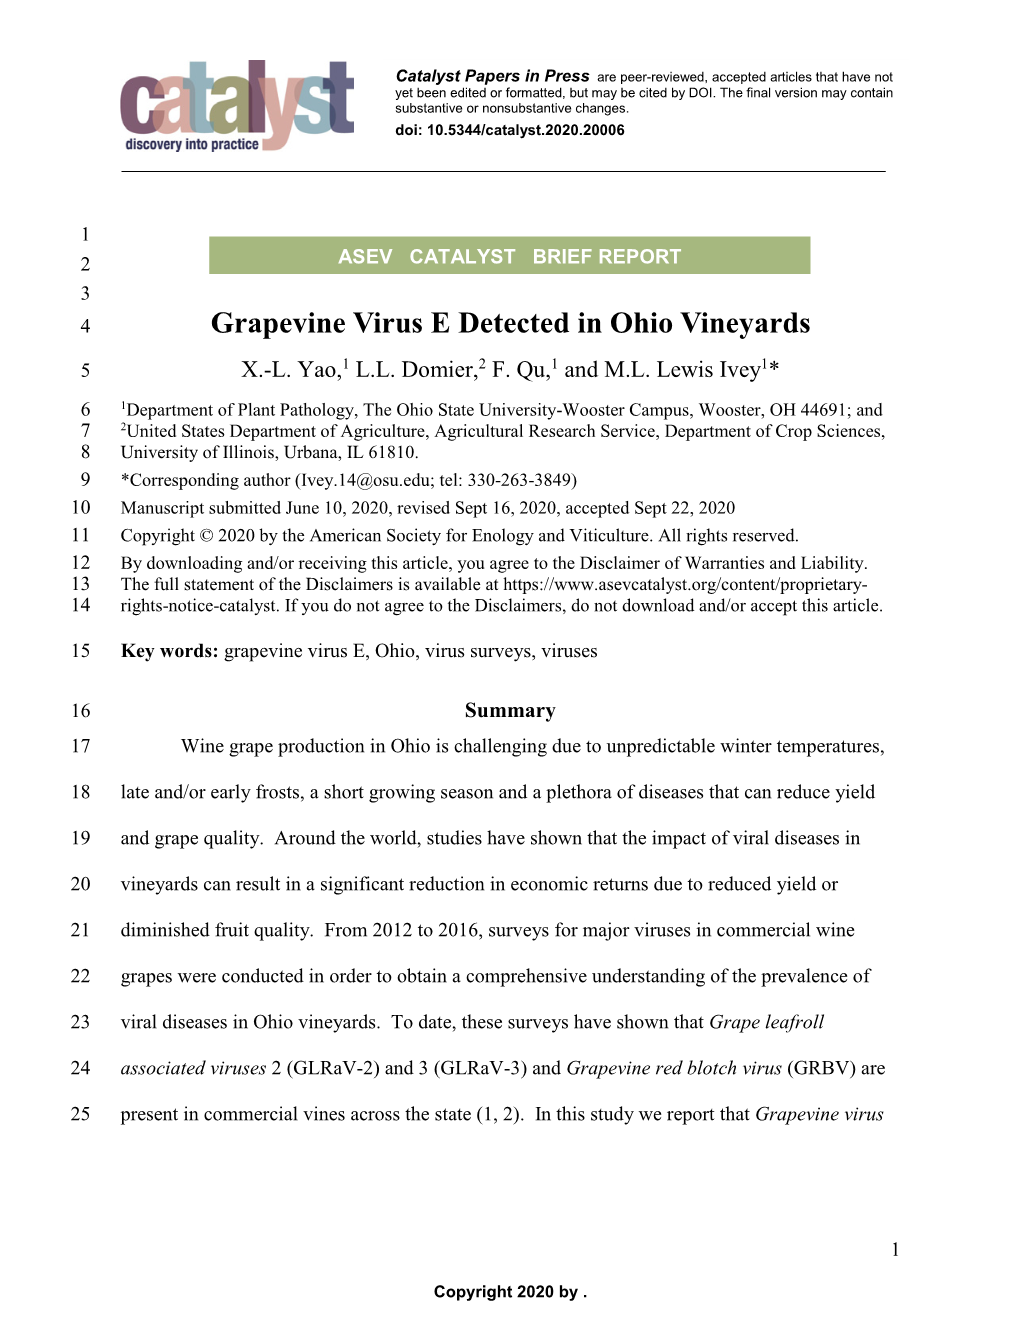 Grapevine Virus E Detected in Ohio Vineyards 5 X.-L